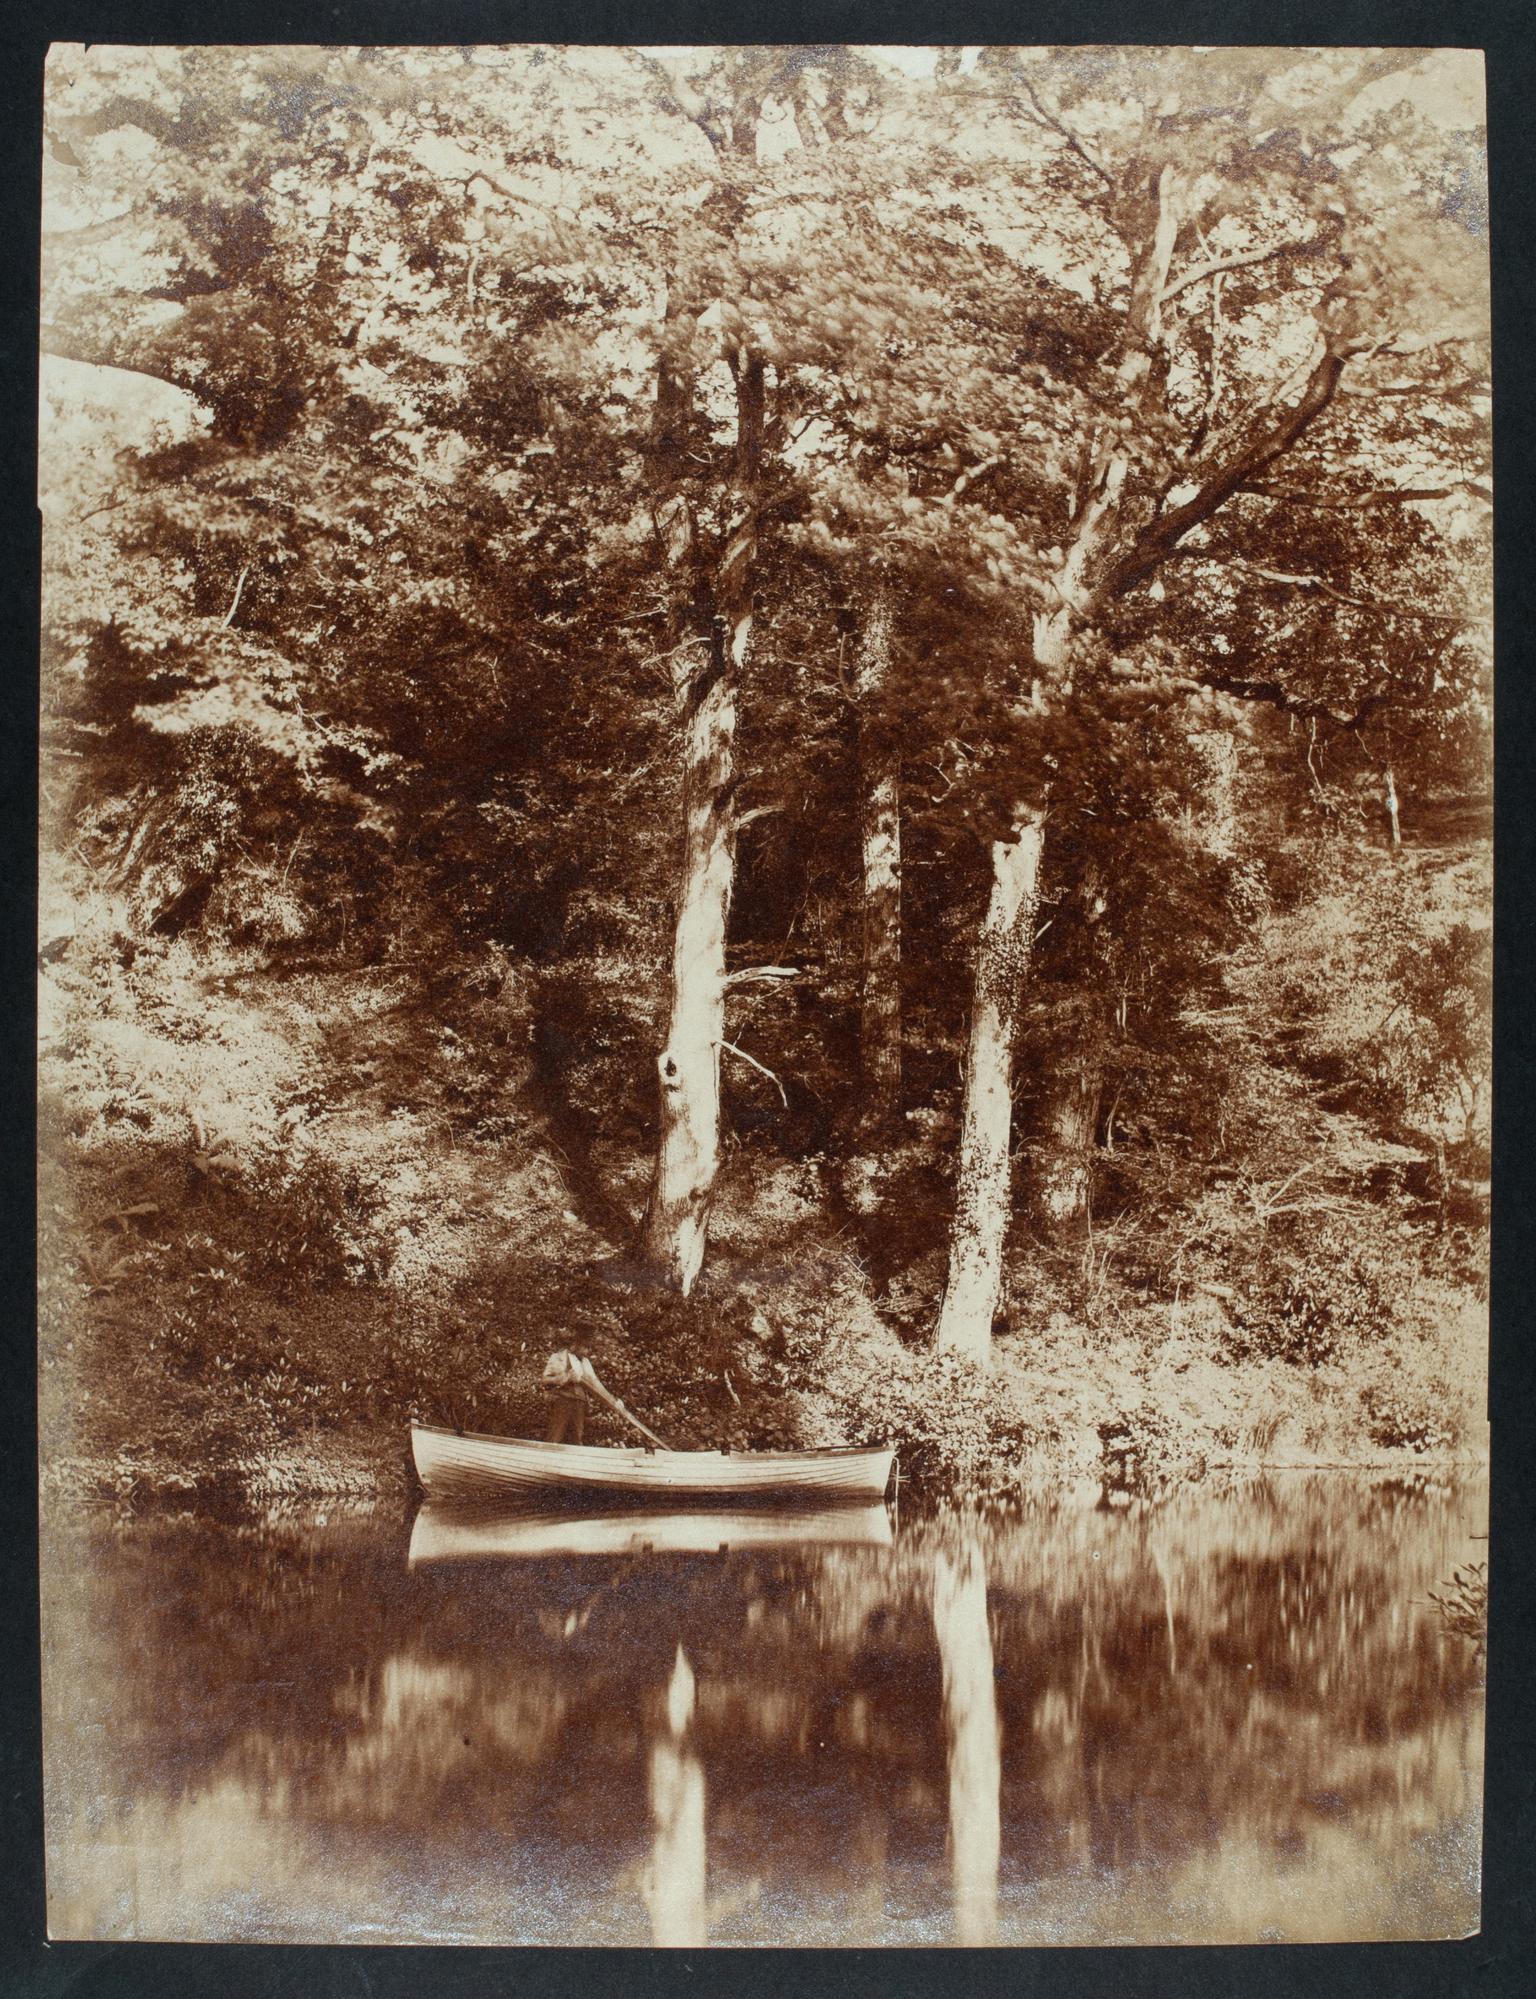 Penllergare, lower lake, photograph